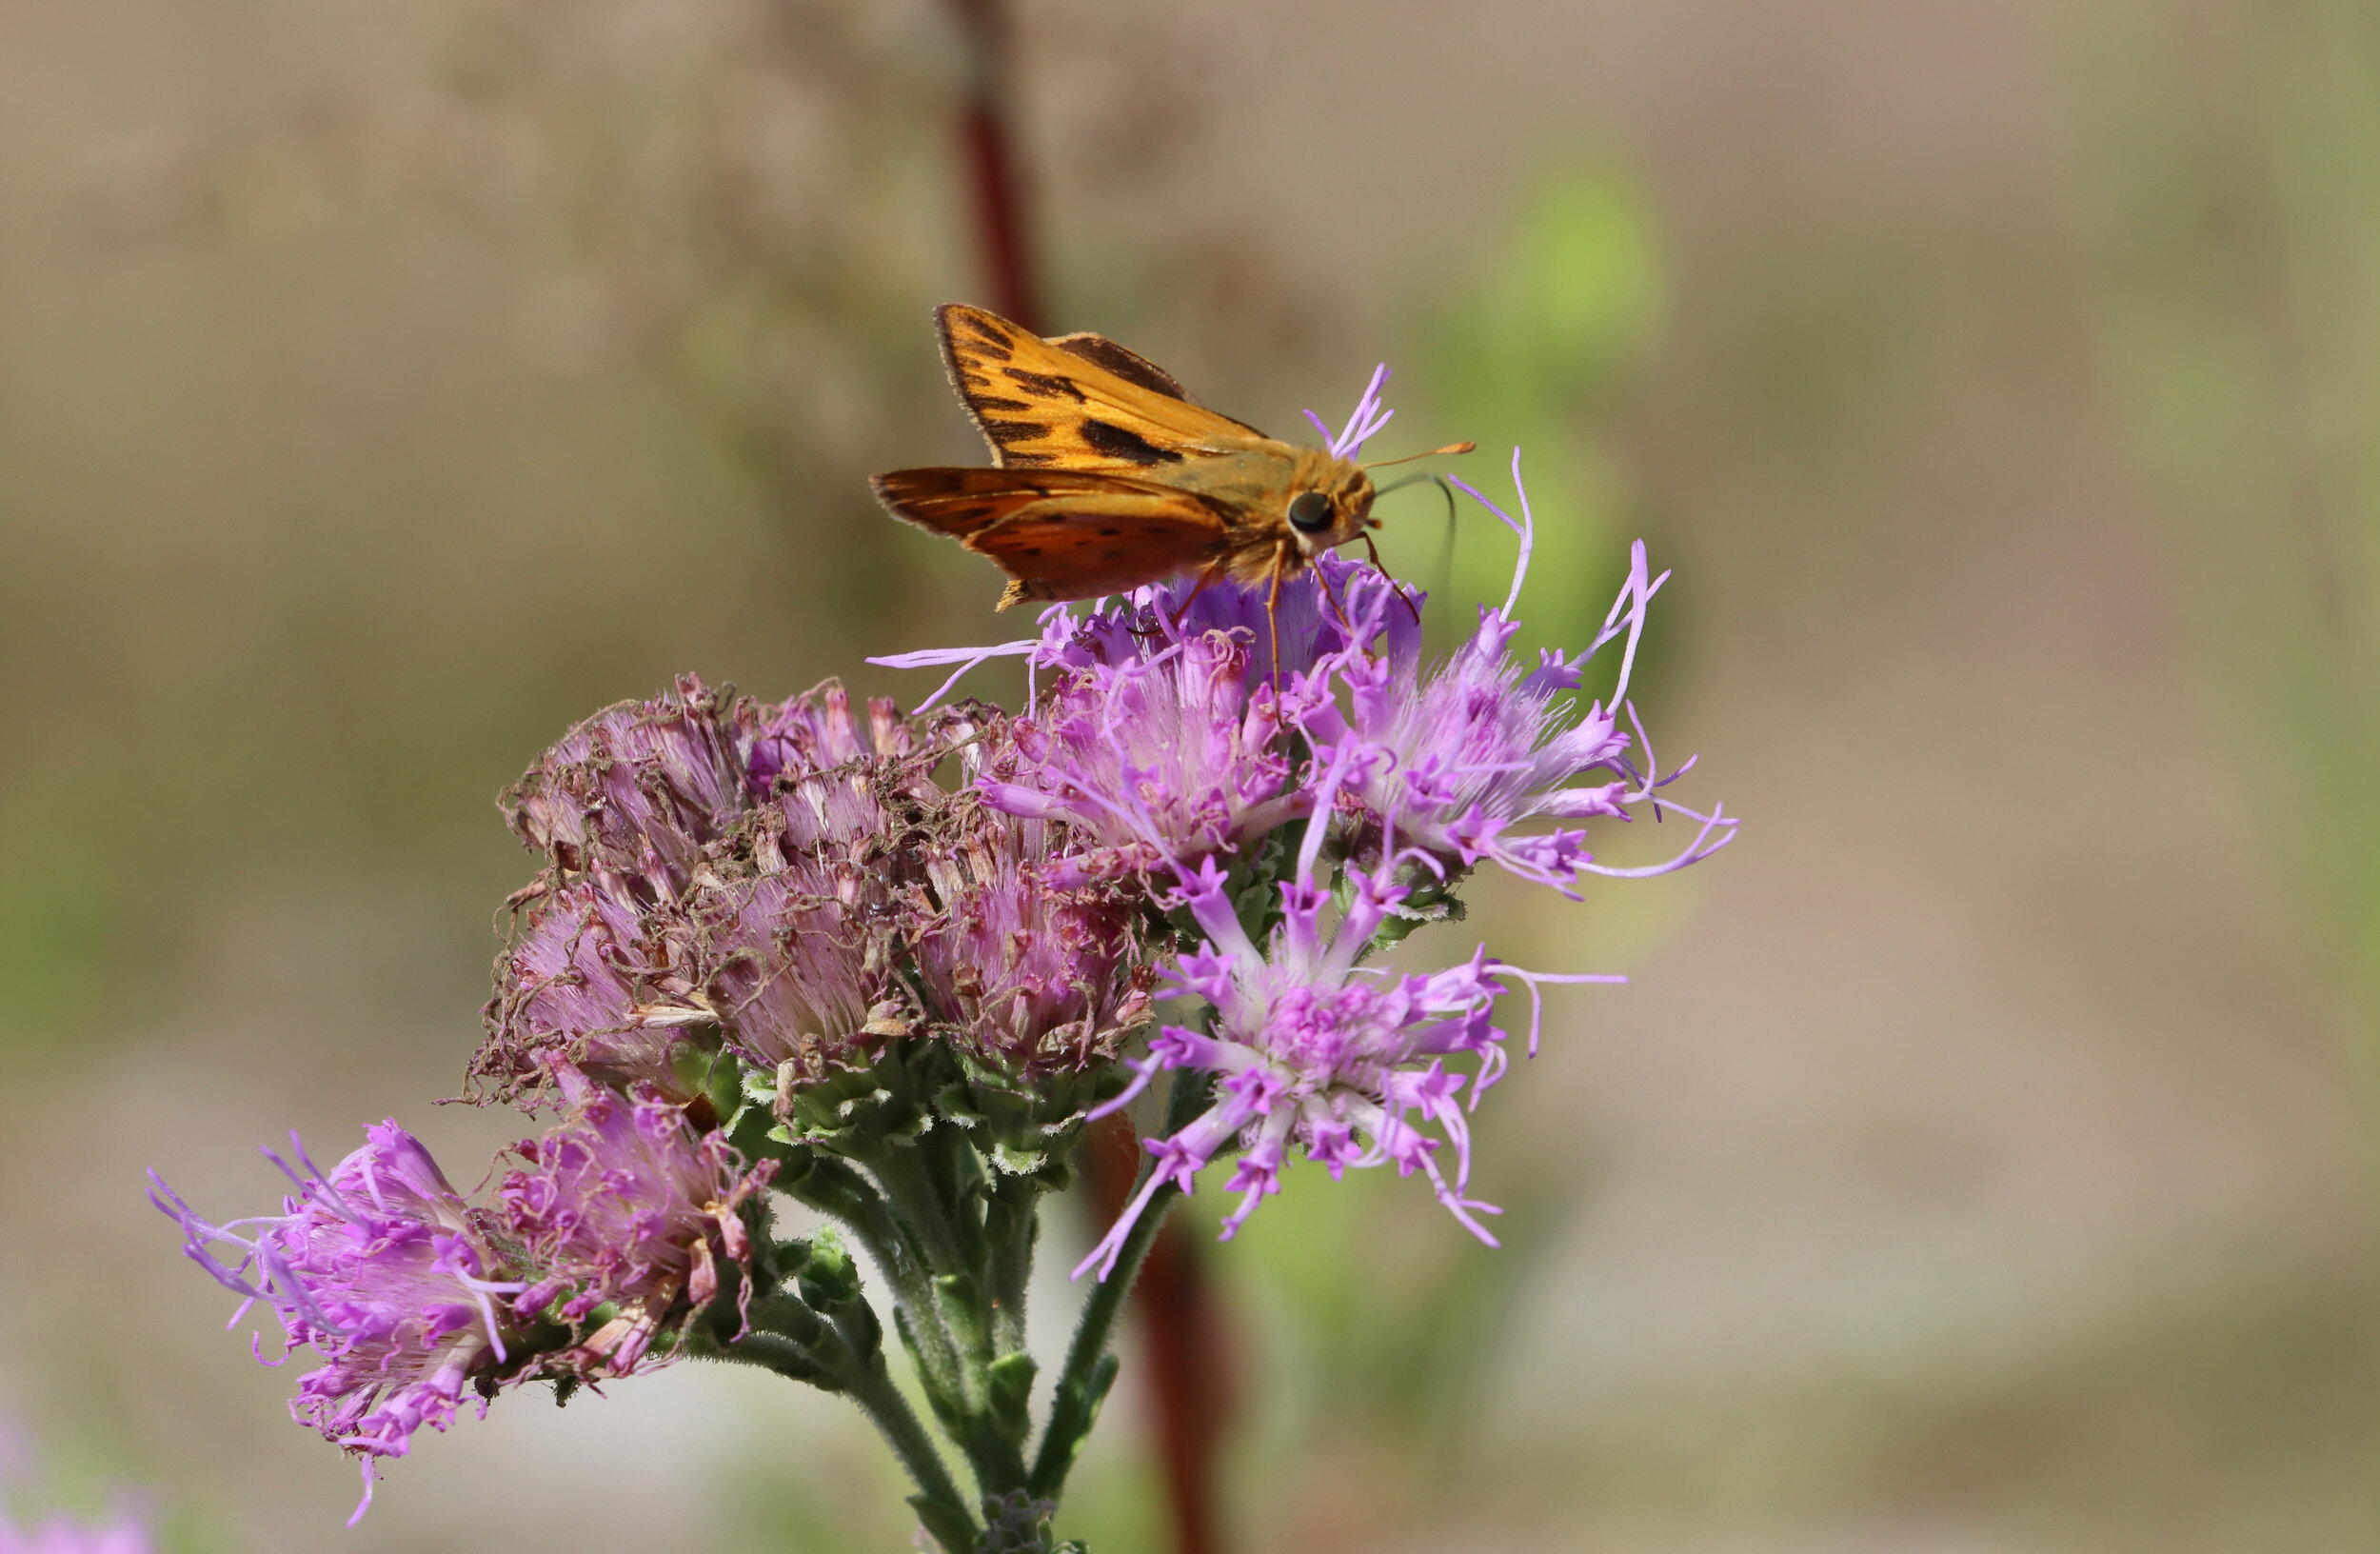  Skipper (a type of butterfly) on Vanillaleaf  (Small orange and brown skipper on purple Vanillaleaf flowers) 